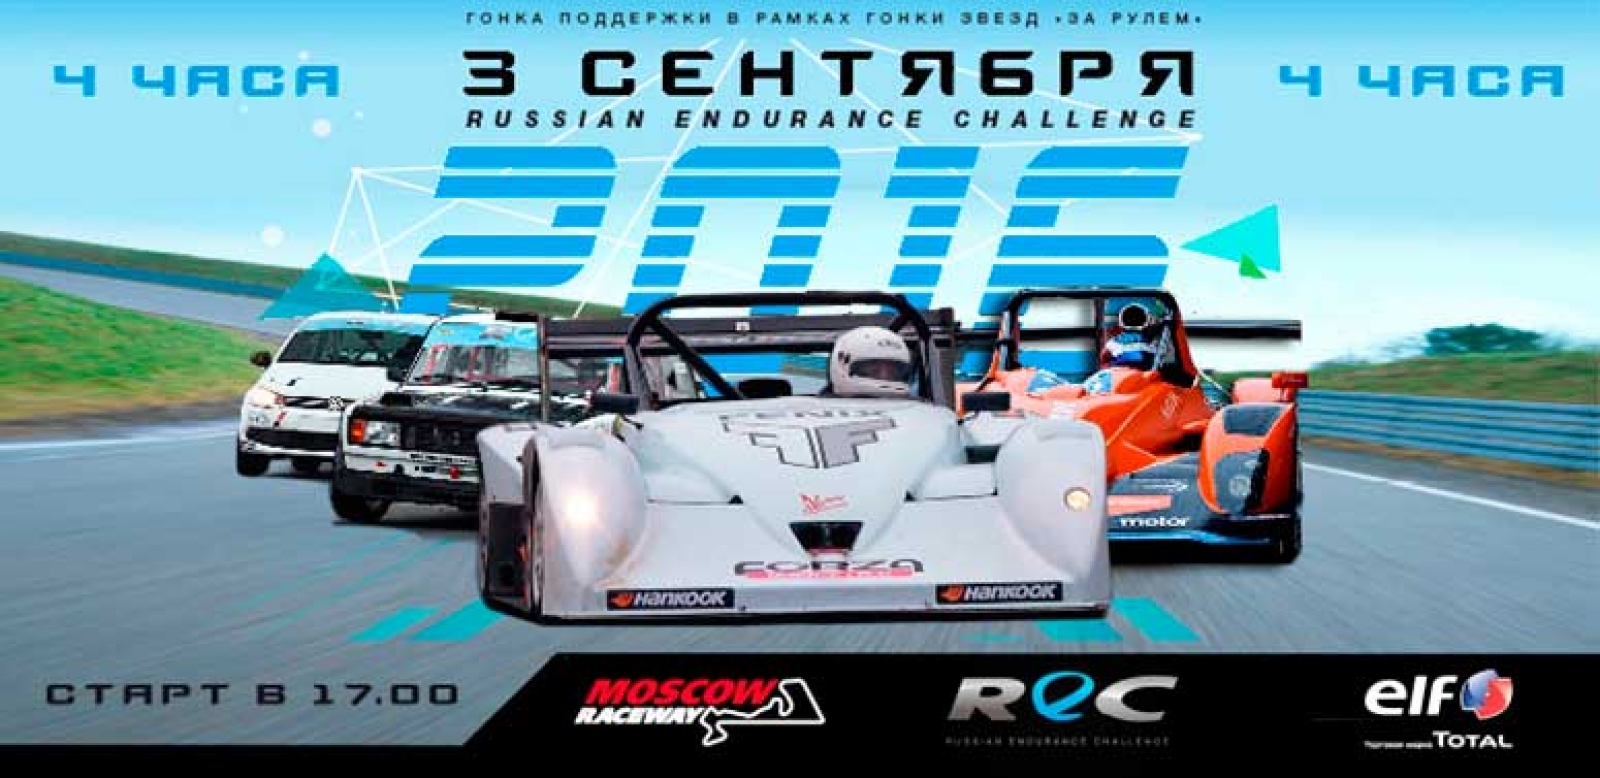 Russian Endurance Challenge